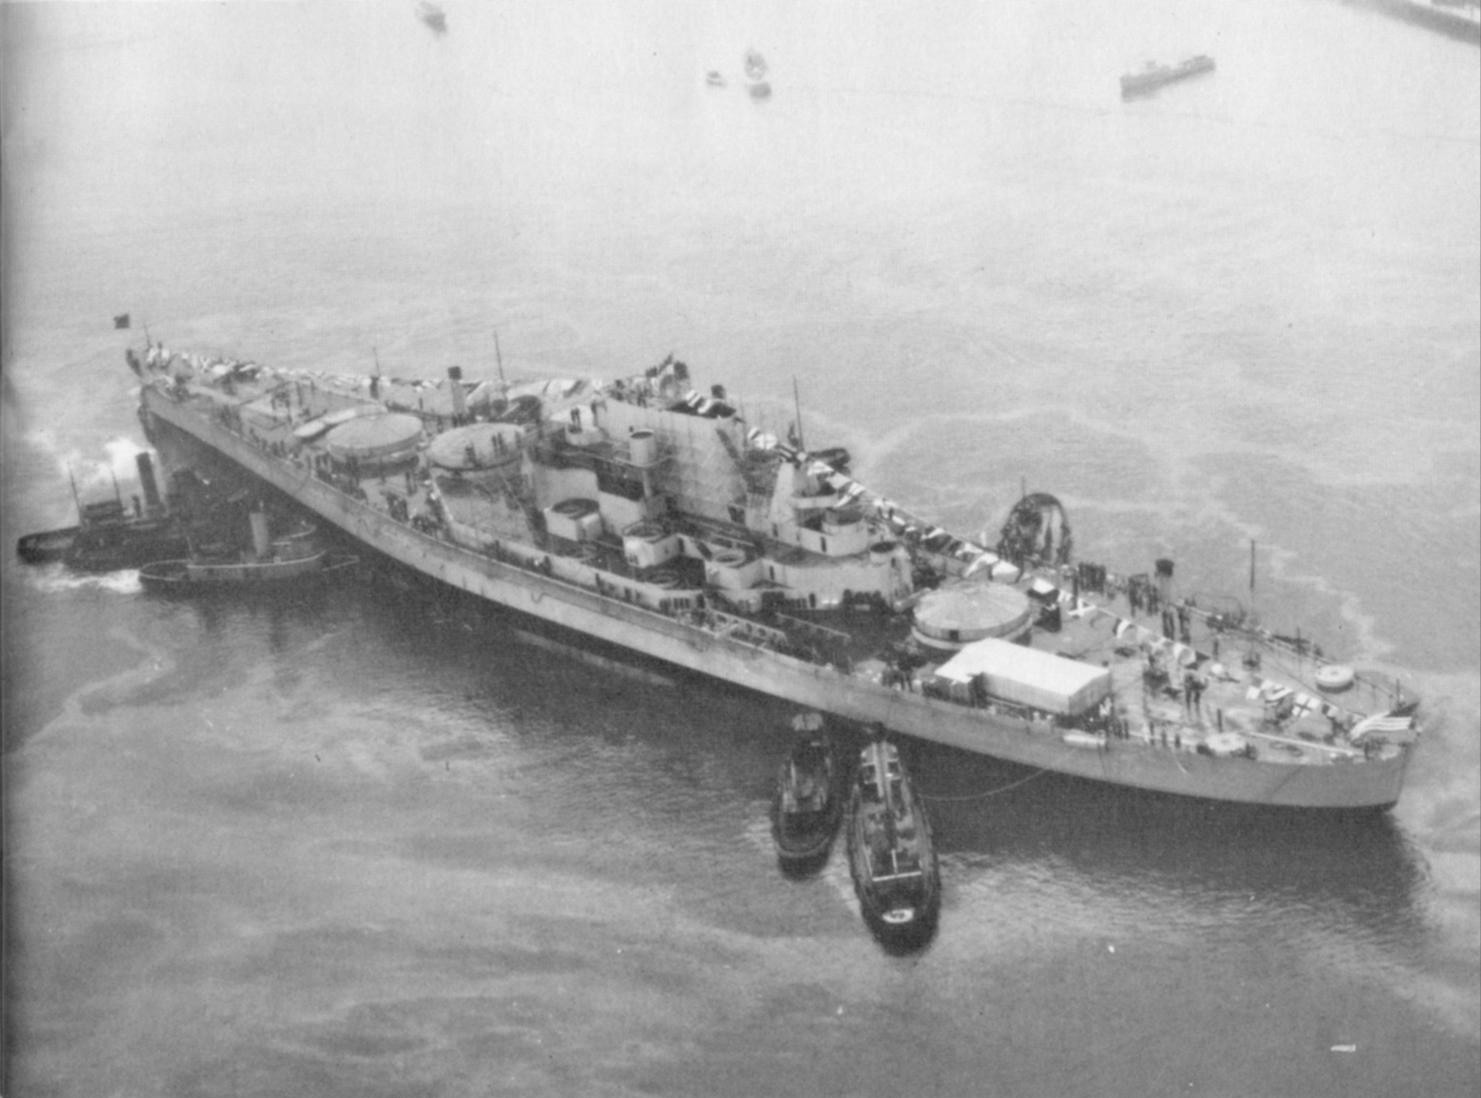 Battleship Alabama just after launch, Norfolk Naval Shipayrd, Portsmouth, Virginia, United States, 16 Feb 1942, photo 1 of 2